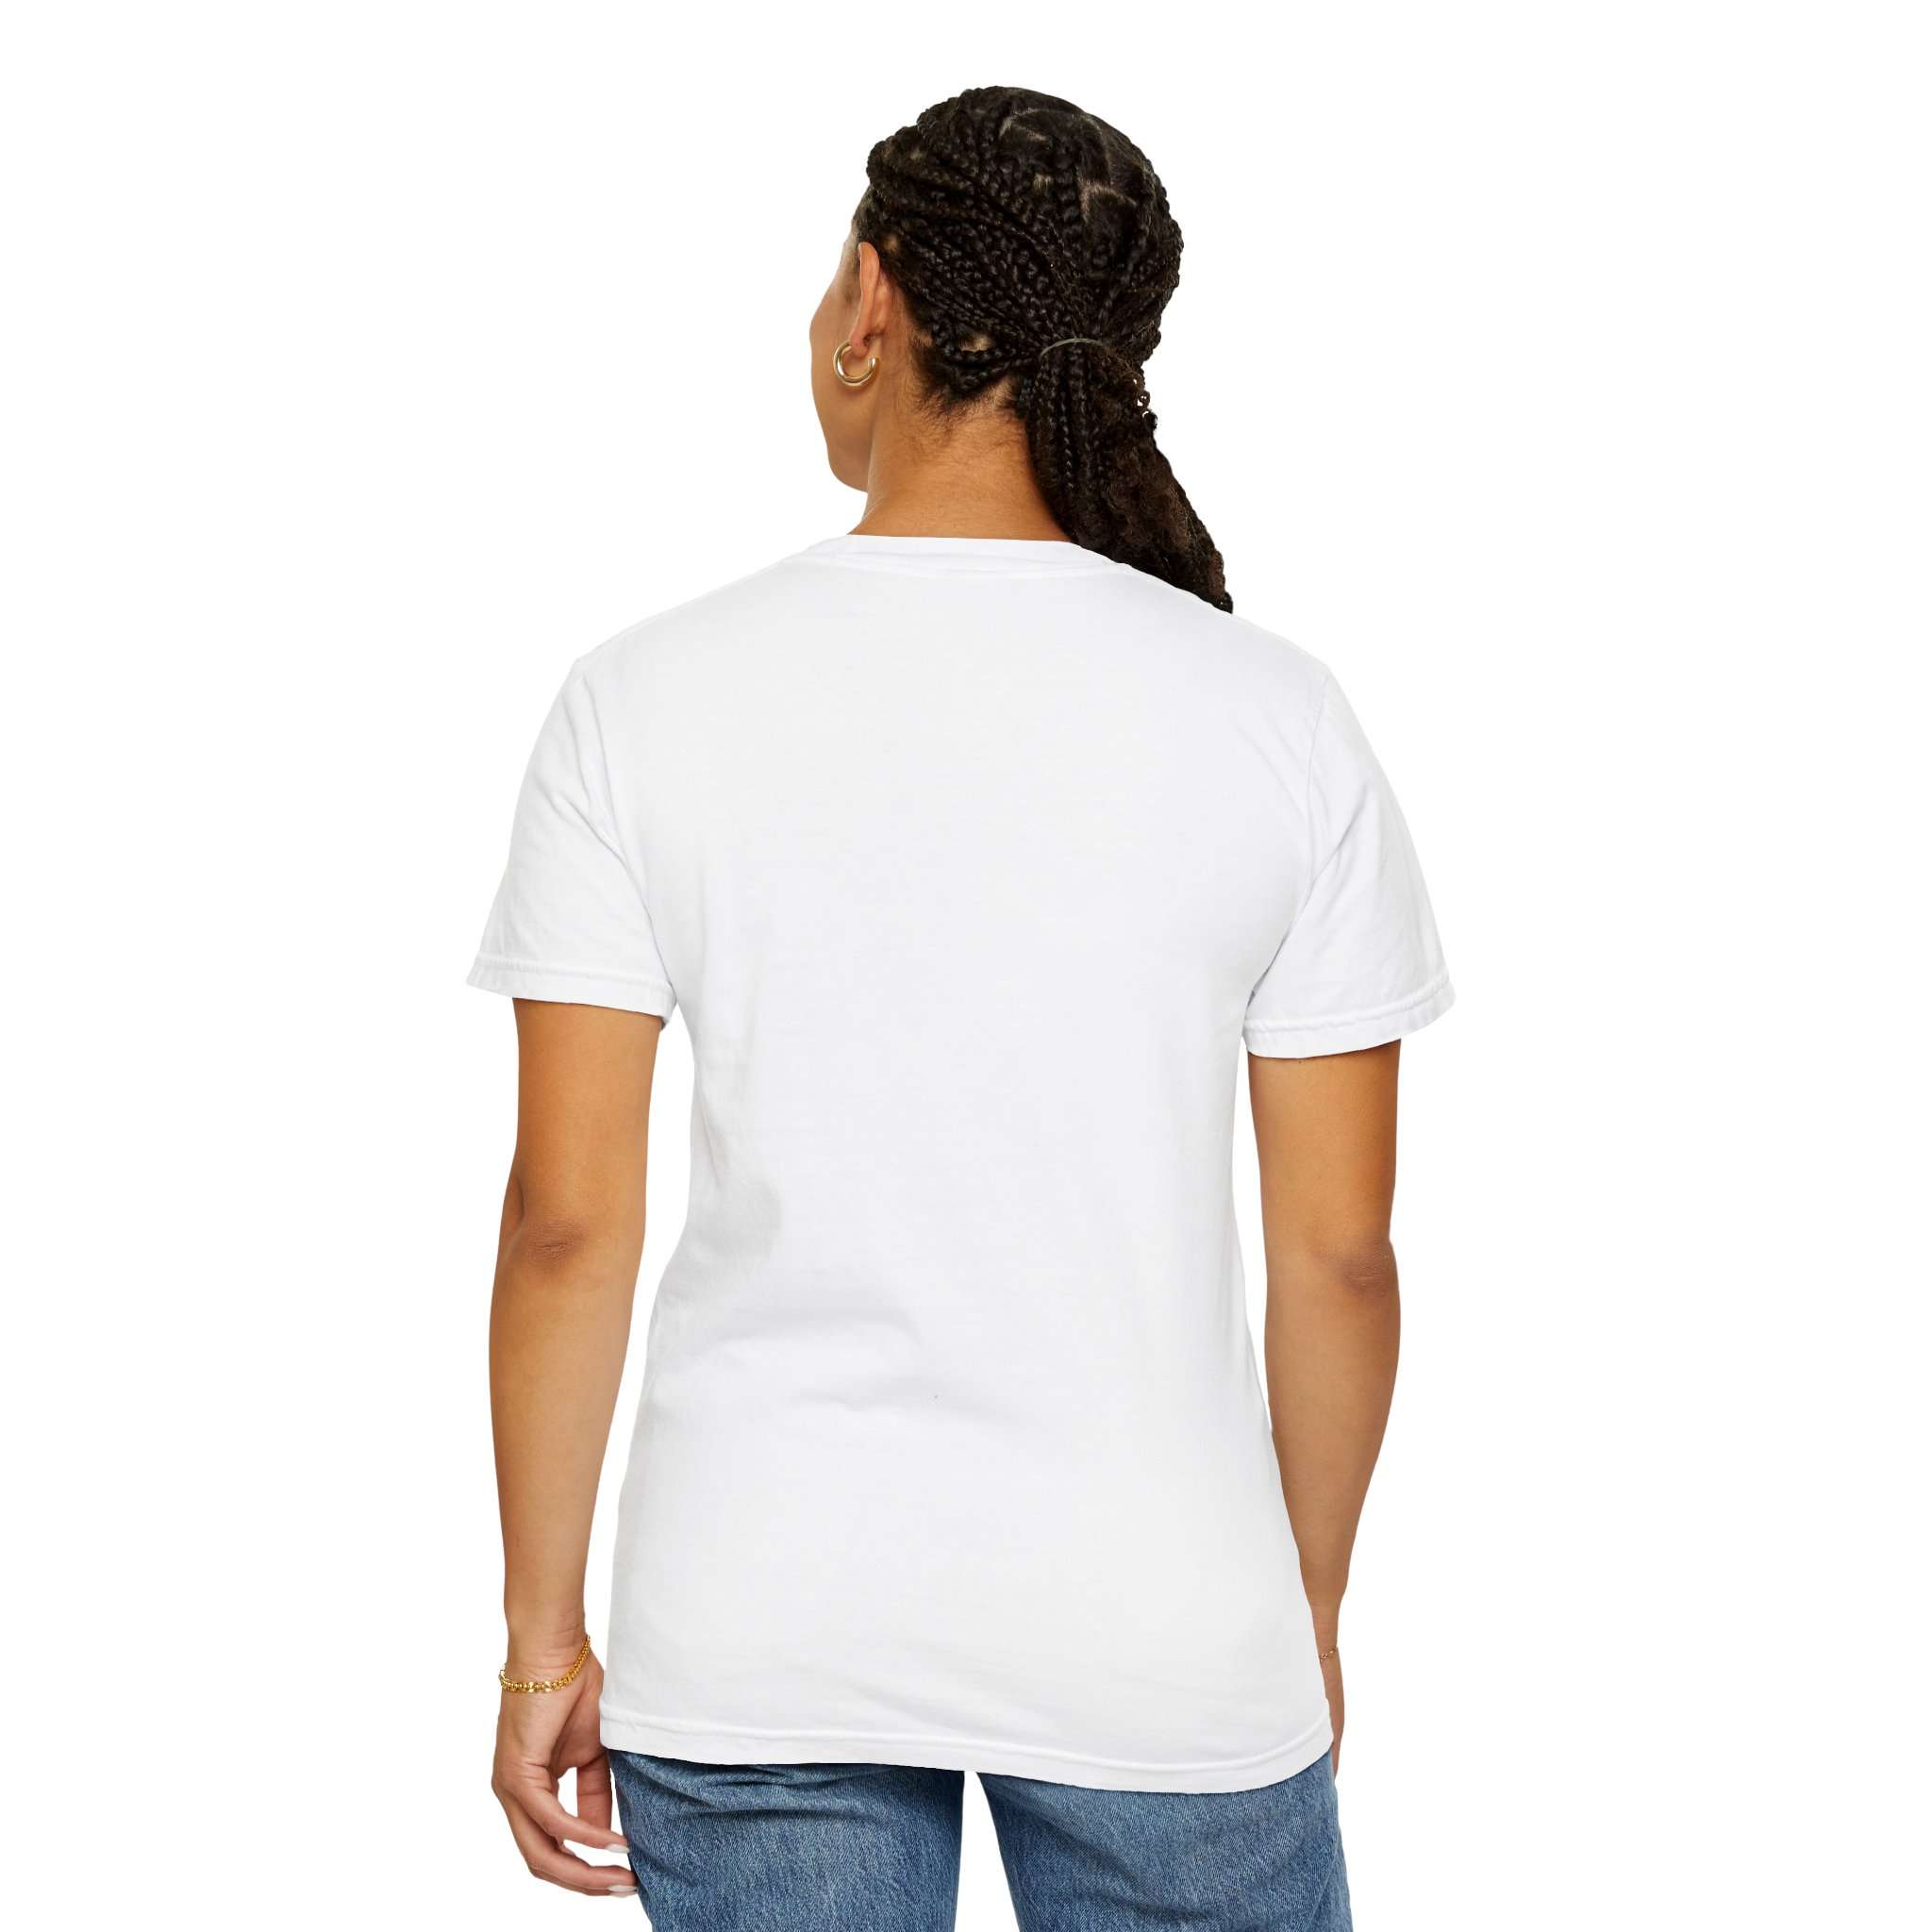 Makima Inspired Character Unisex Garment-Dyed T-shirt